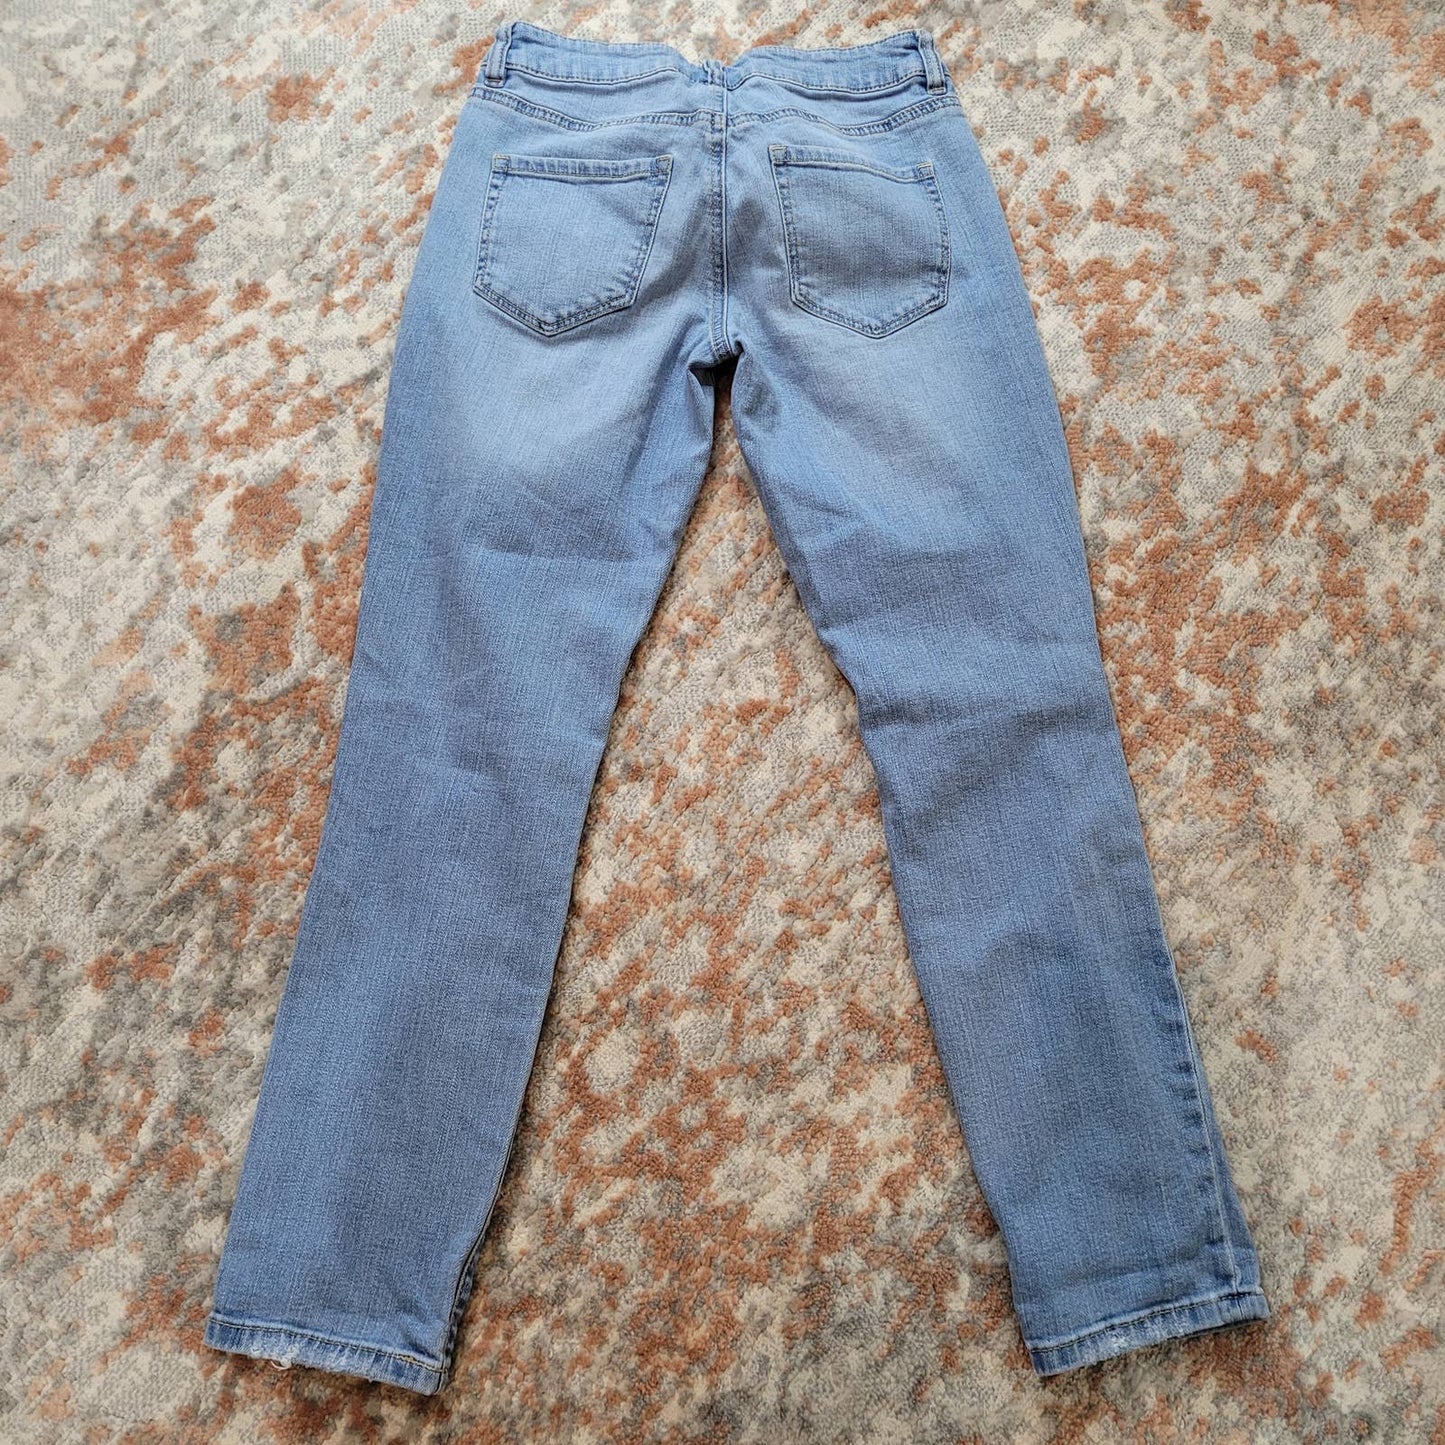 Dynamite Denim Cara Light Wash Distressed Jeans - Size 24Markita's ClosetDynamite